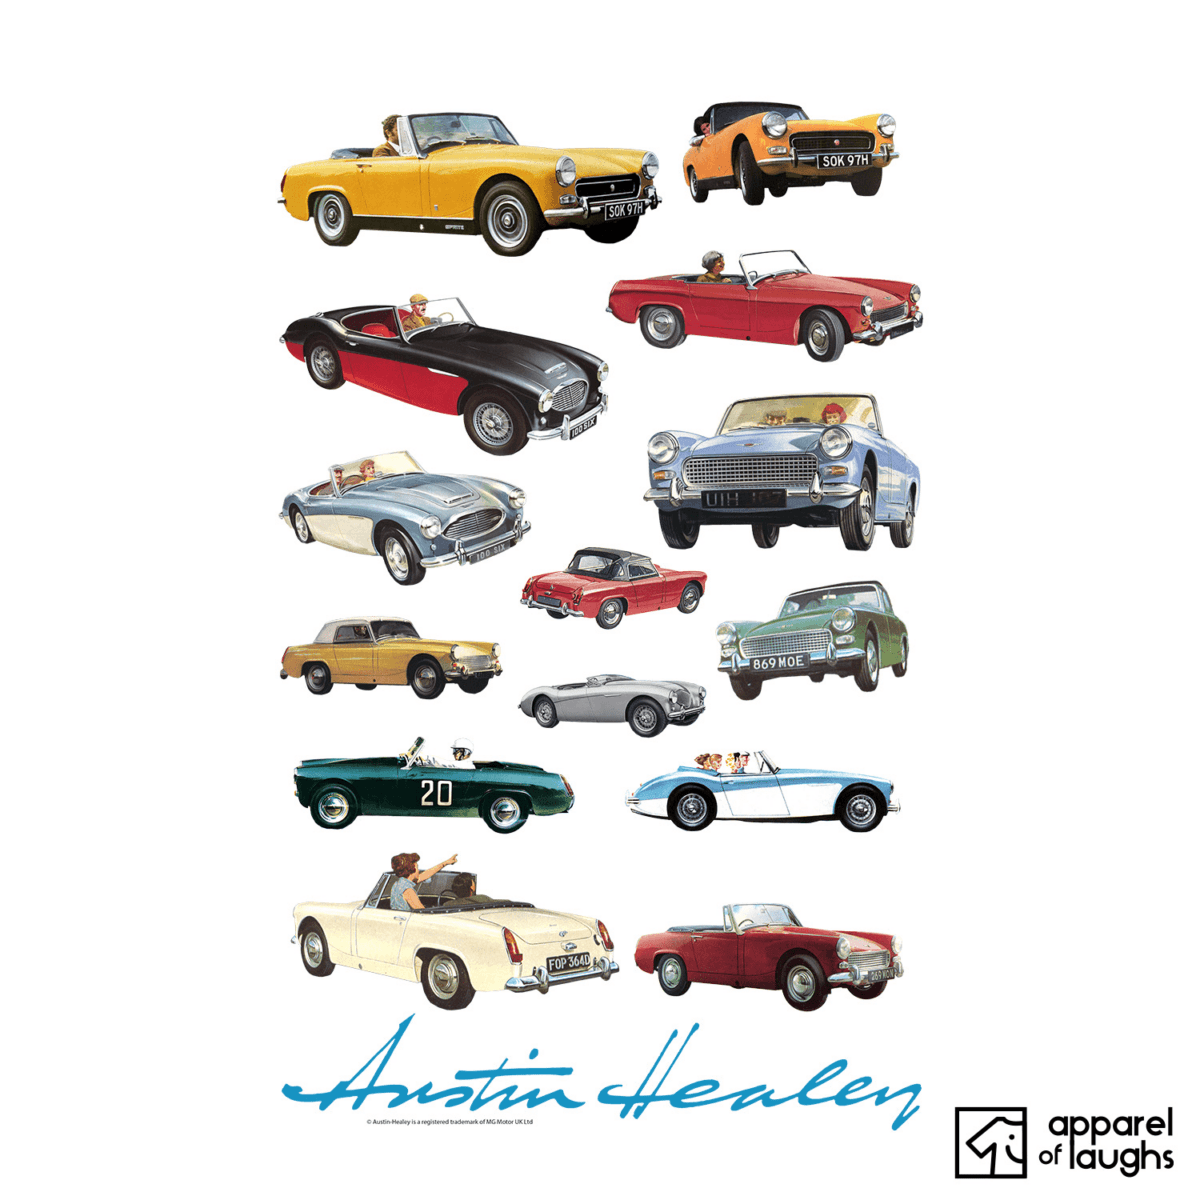 Austin Healey Car Brand Vintage Retro British Leyland Motoring Automotive Illustration Collage T-Shirt Design Sports Grey